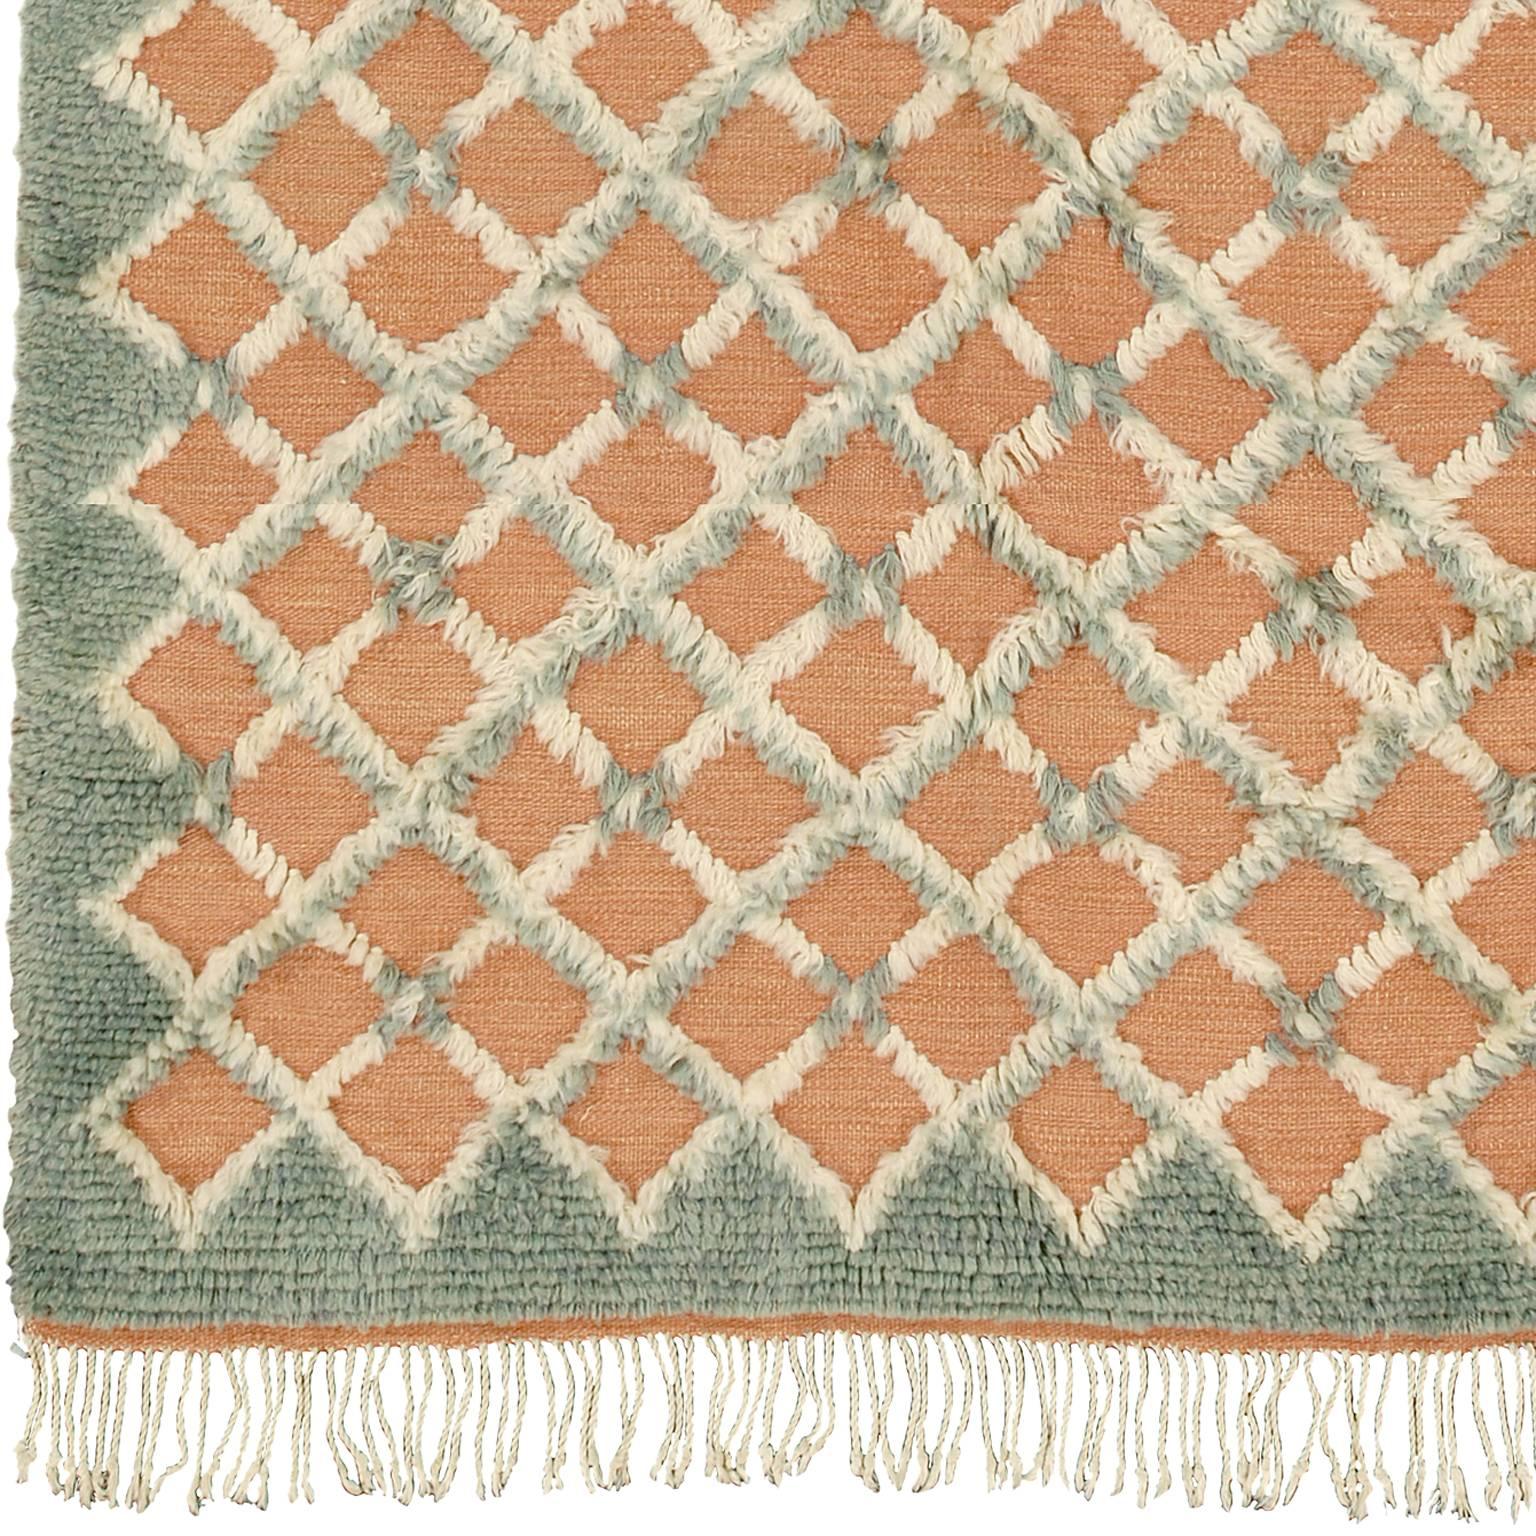 Swedish pile rug
Sweden, circa 1930
Handwoven
9'7